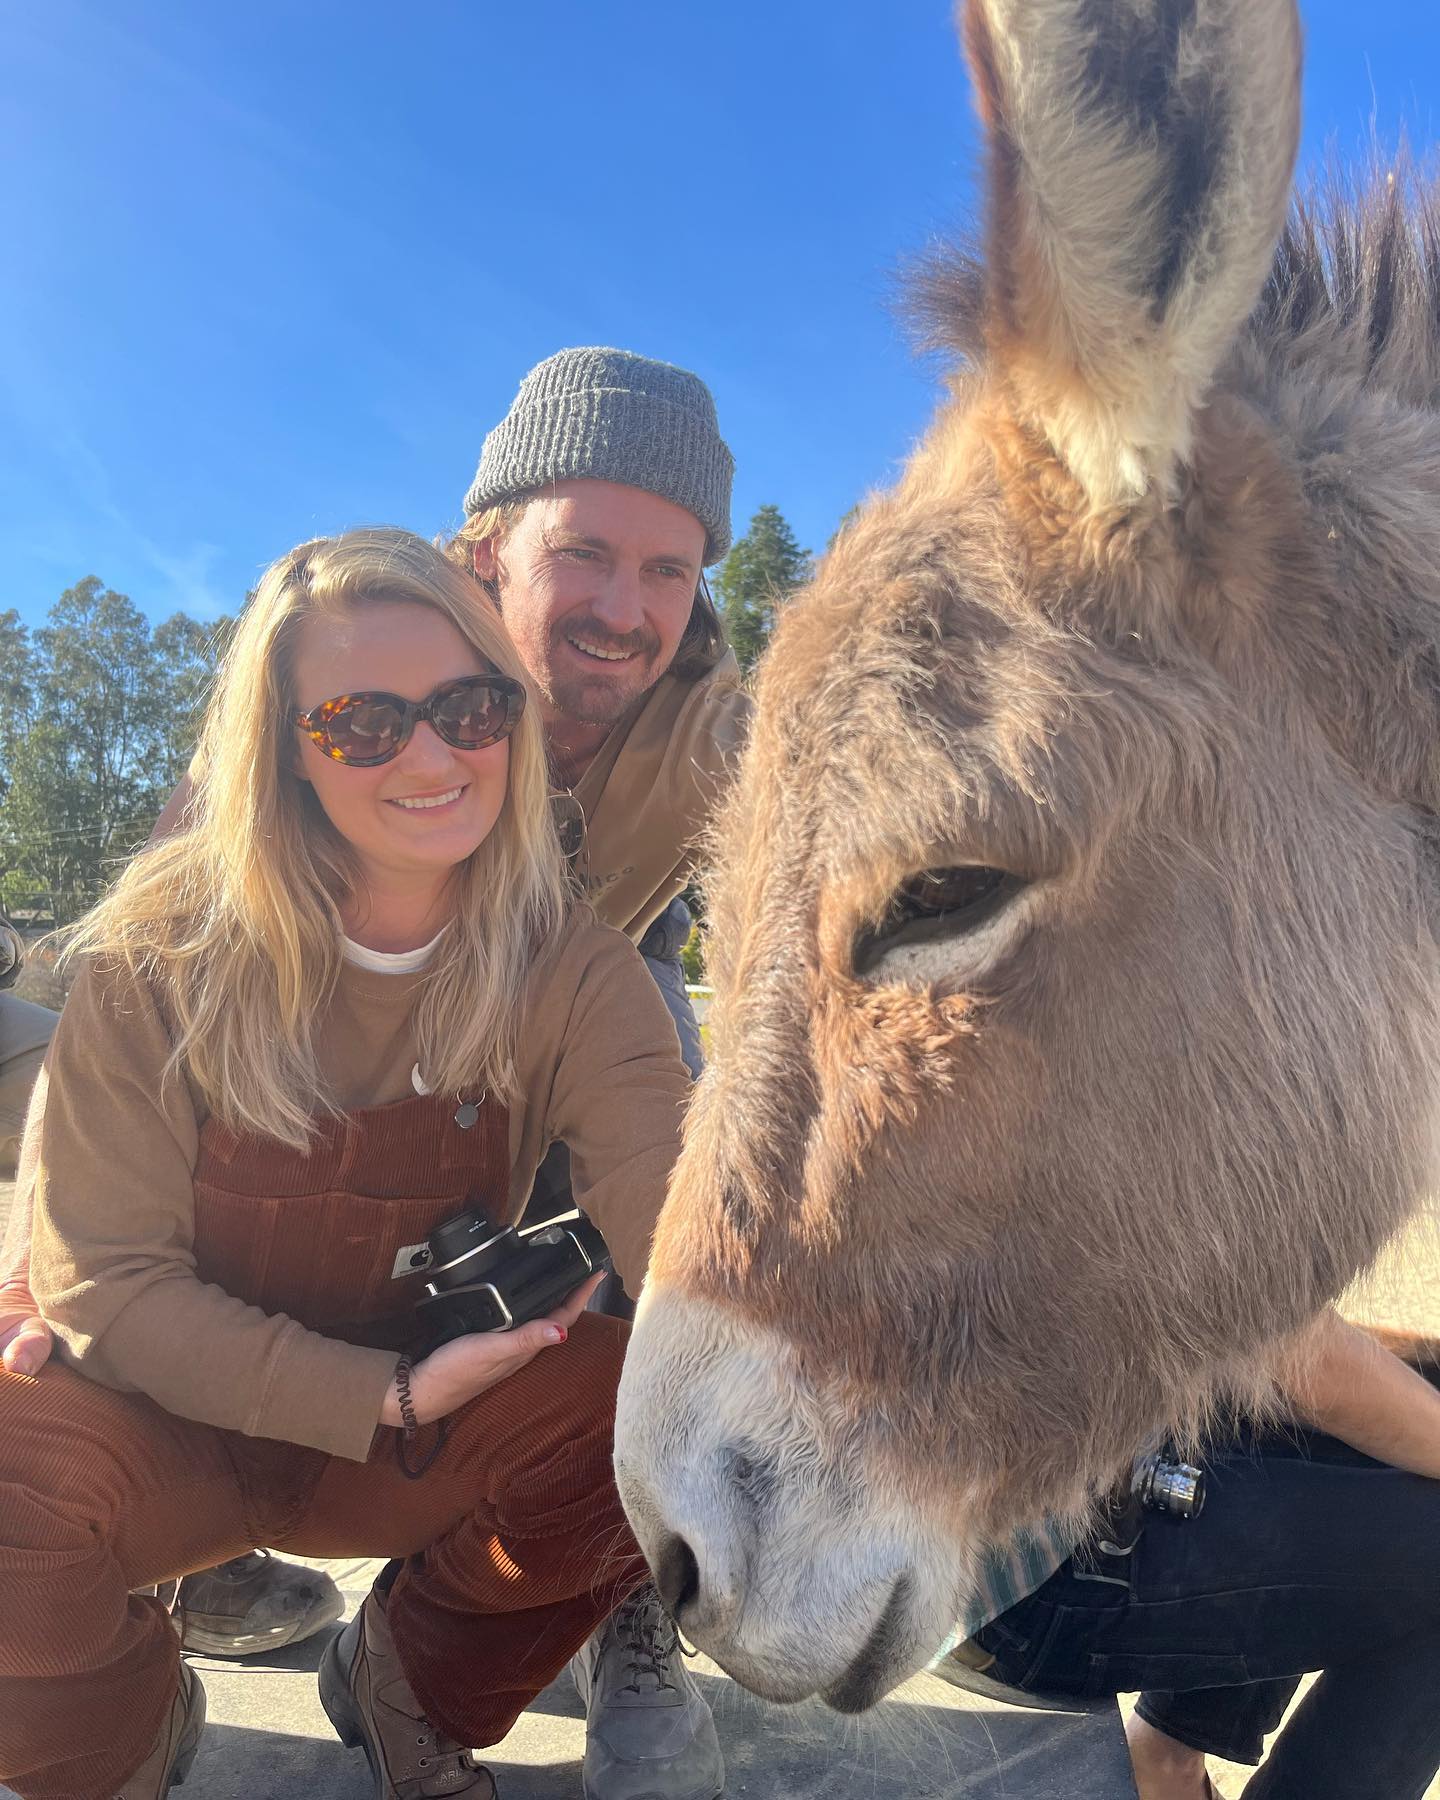 AJ Michalka and her boyfriend, Josh Pence, caressing a donkey at the Rancho Burro Donkey Sanctuary